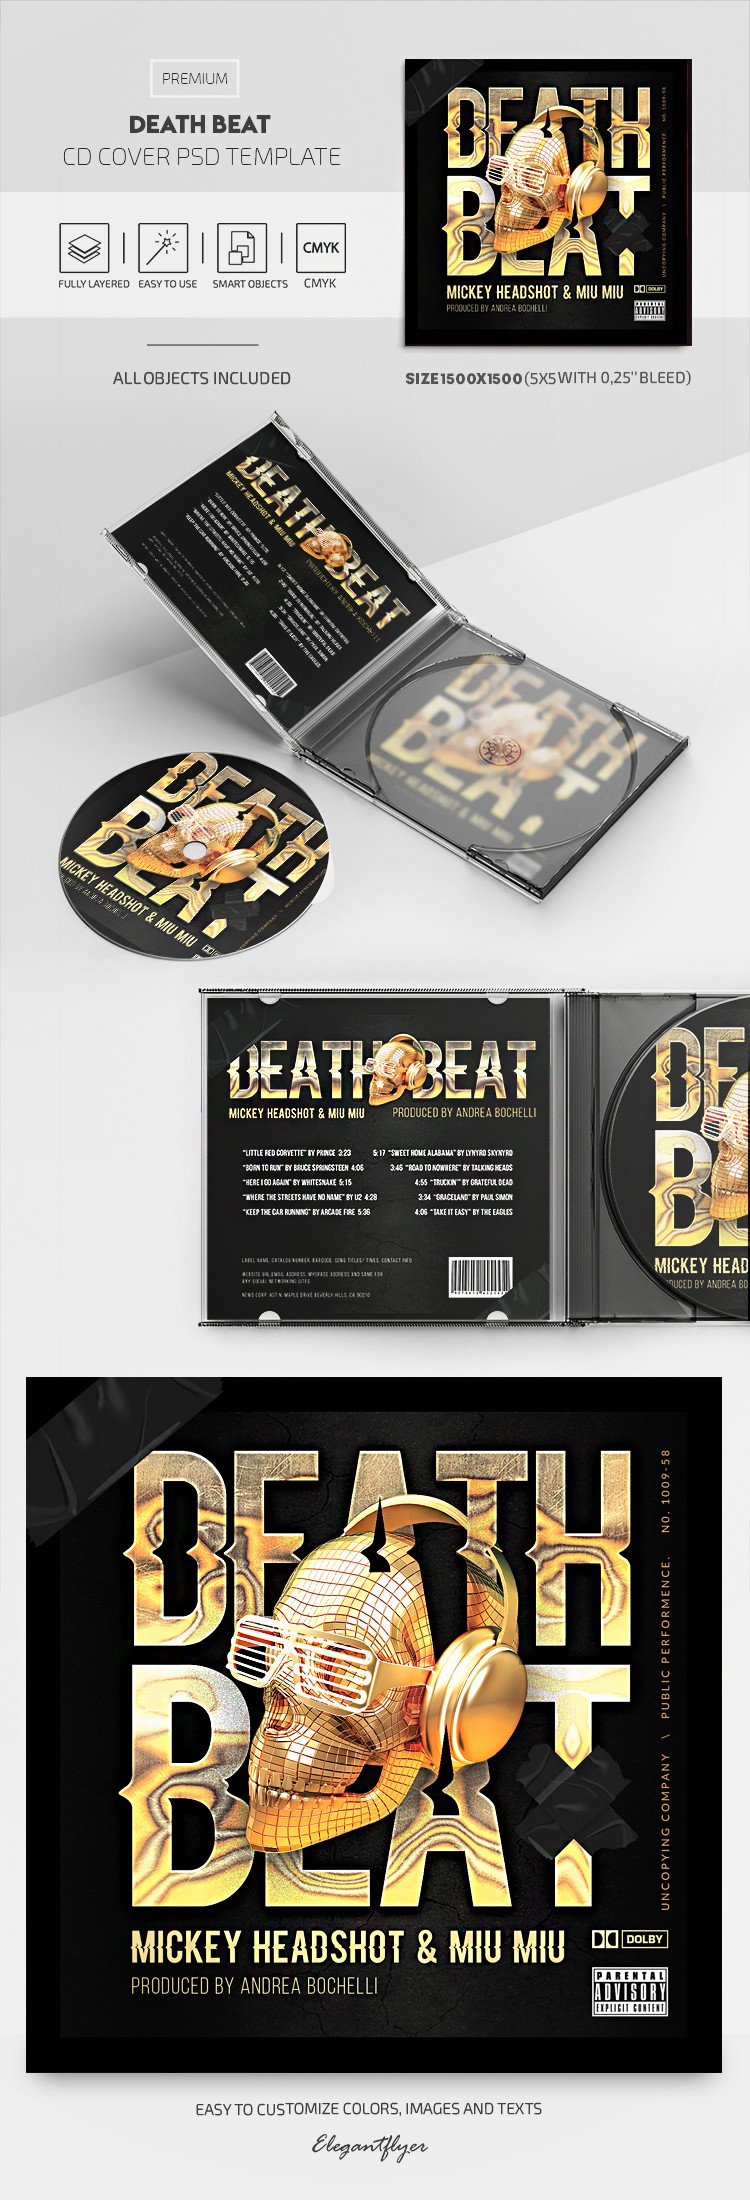 Portada del CD Death Beat. by ElegantFlyer